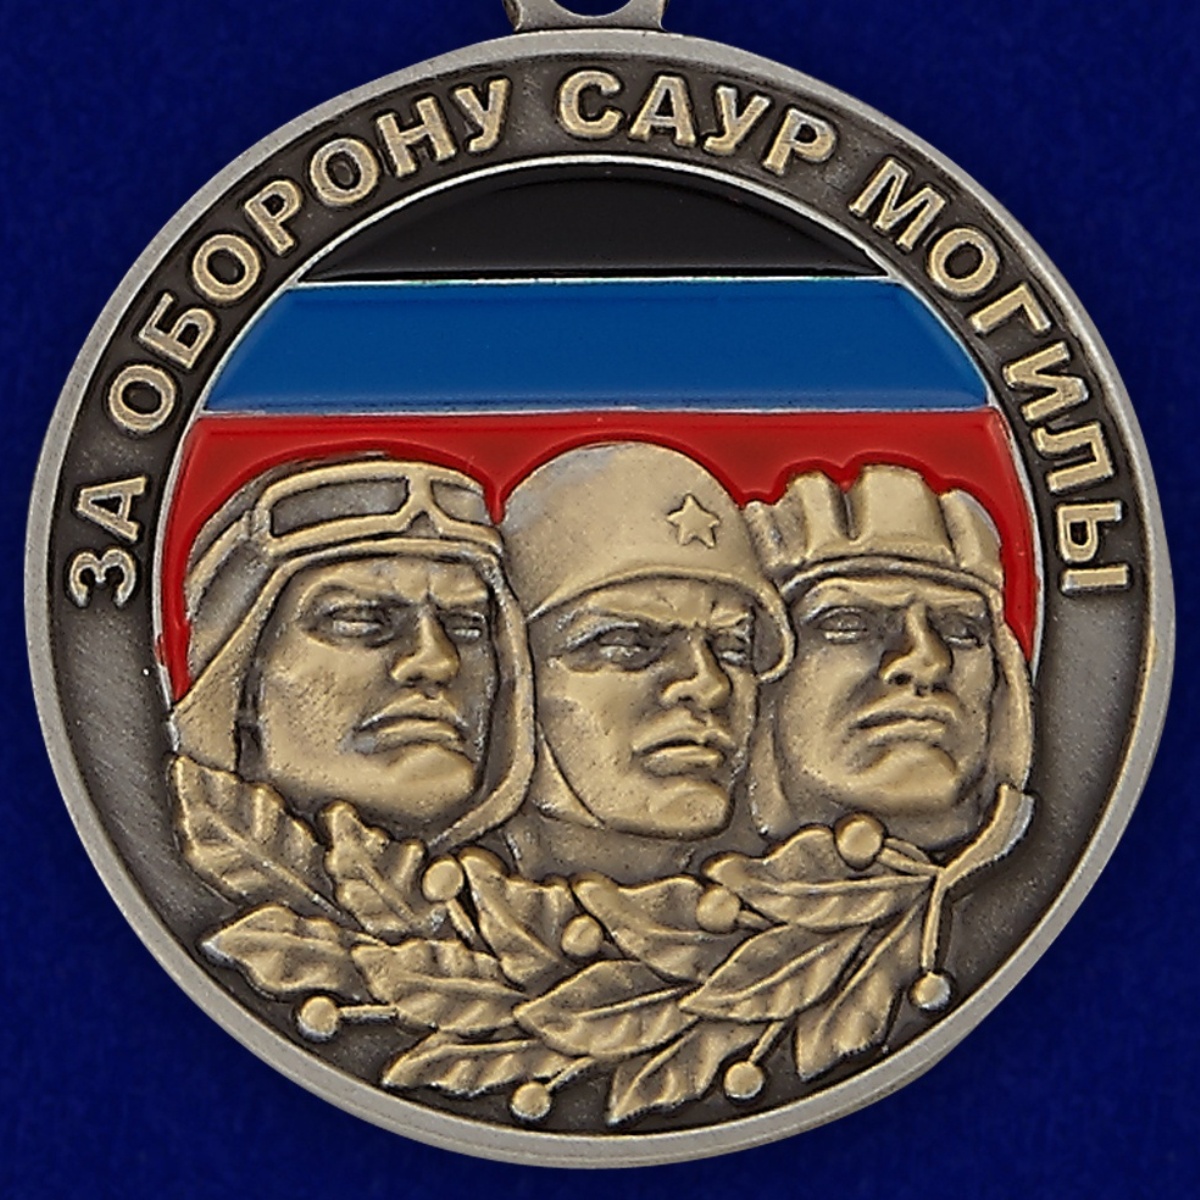 Медаль "За оборону Саур-Могилы" 